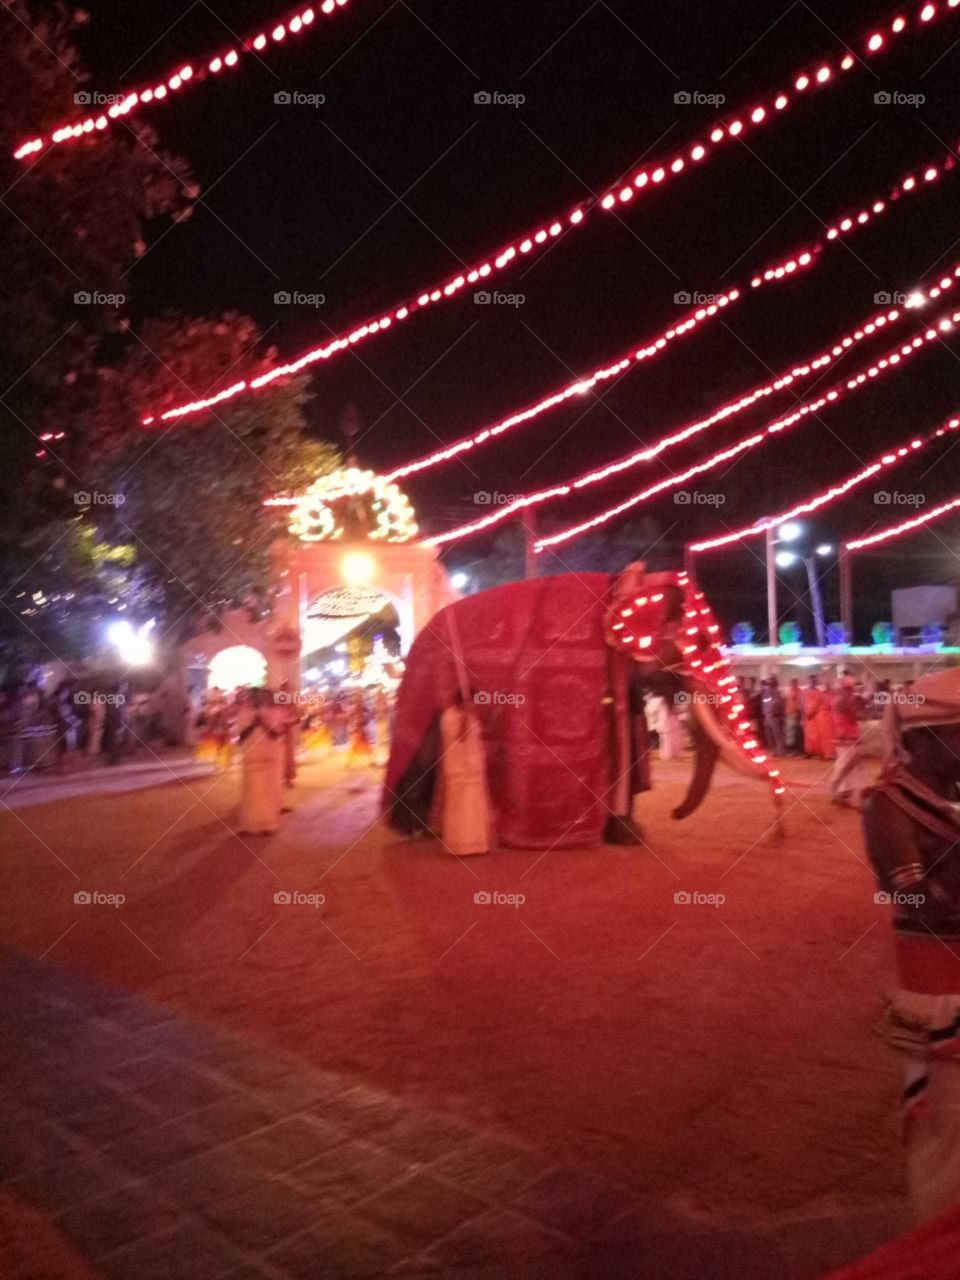 elephant dance